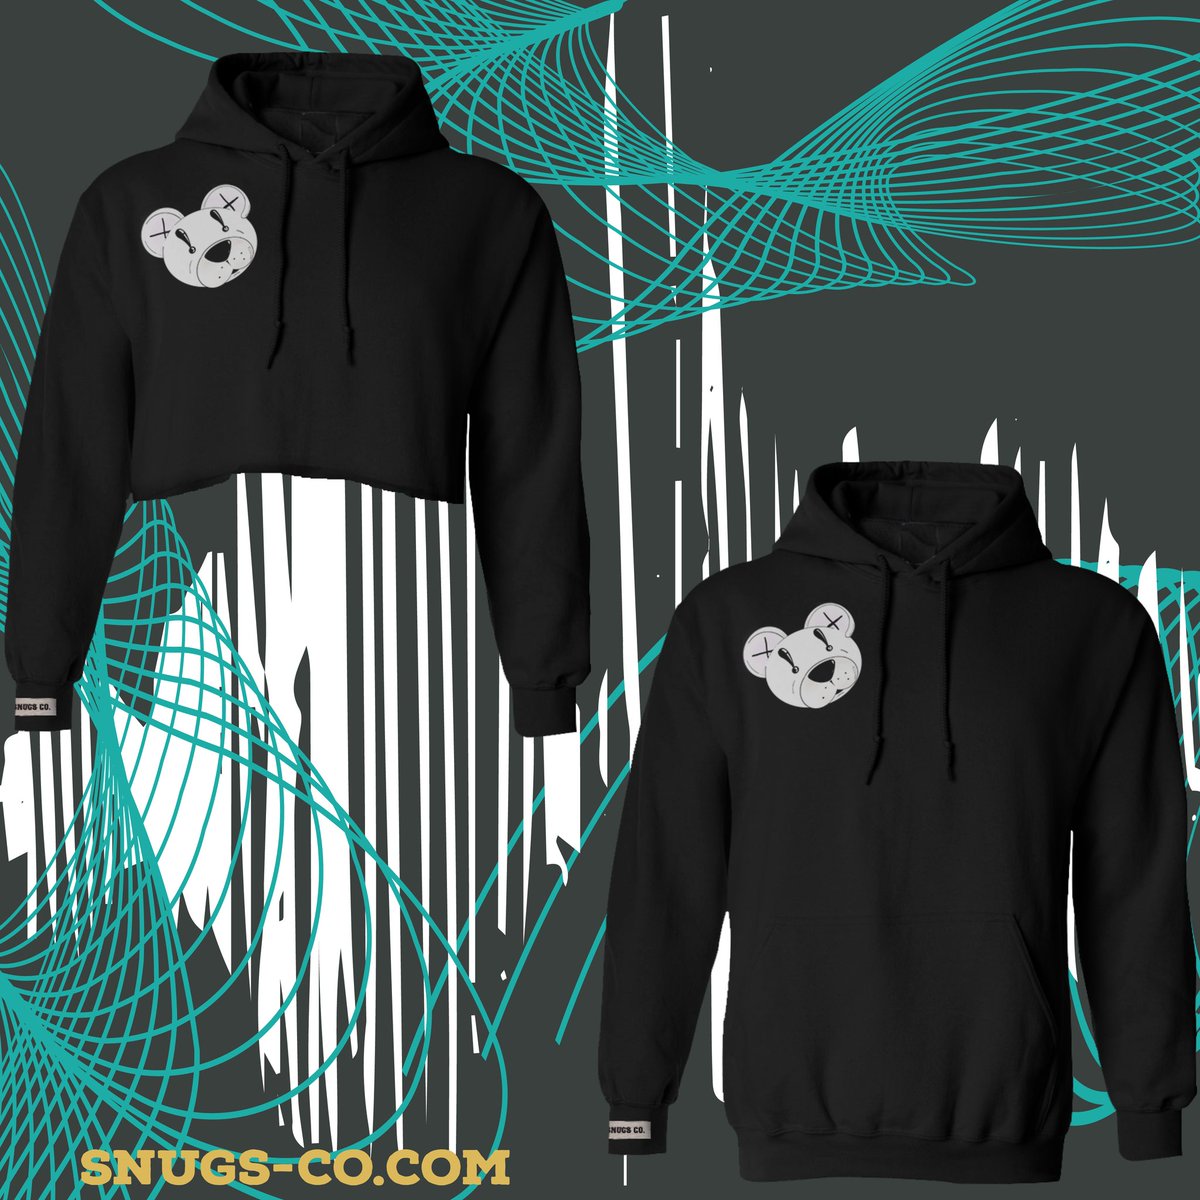 Original hoodies 🔥
SNUGS-CO.COM 

#apparel #snugsco #hoodie #hoodies #bear #design #Croppedhoodie #clothingbrand #unisexapparel #unisexclothing #unisexfashion #unisexstyle #fashion #style #streetwear #streetstyle #streetfashion #original #clothes #clothing